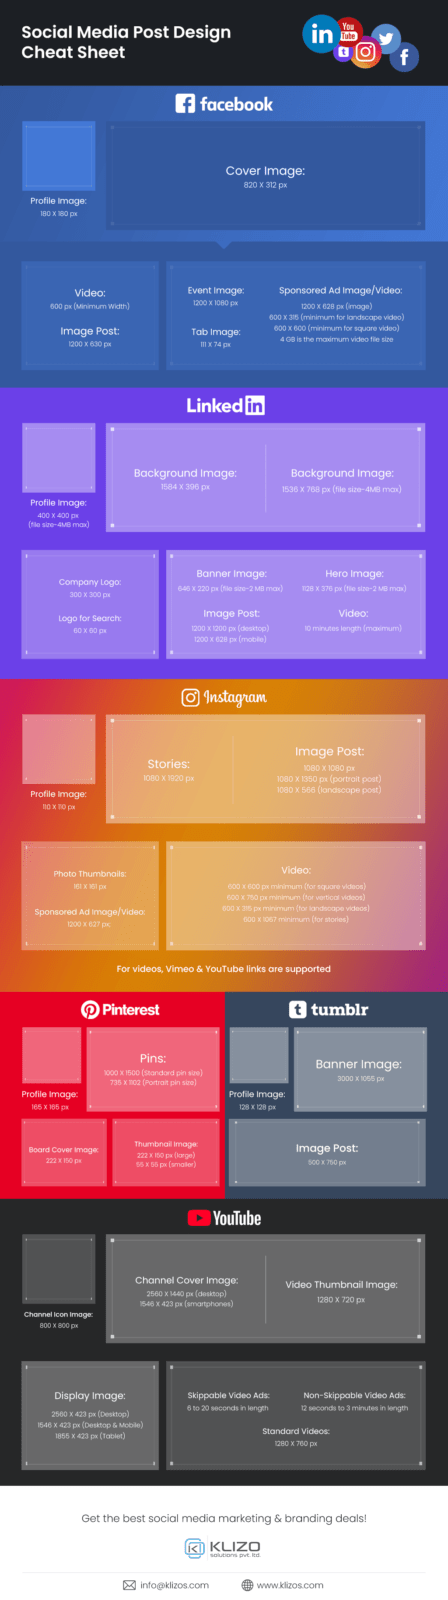 social media post guide - infographic